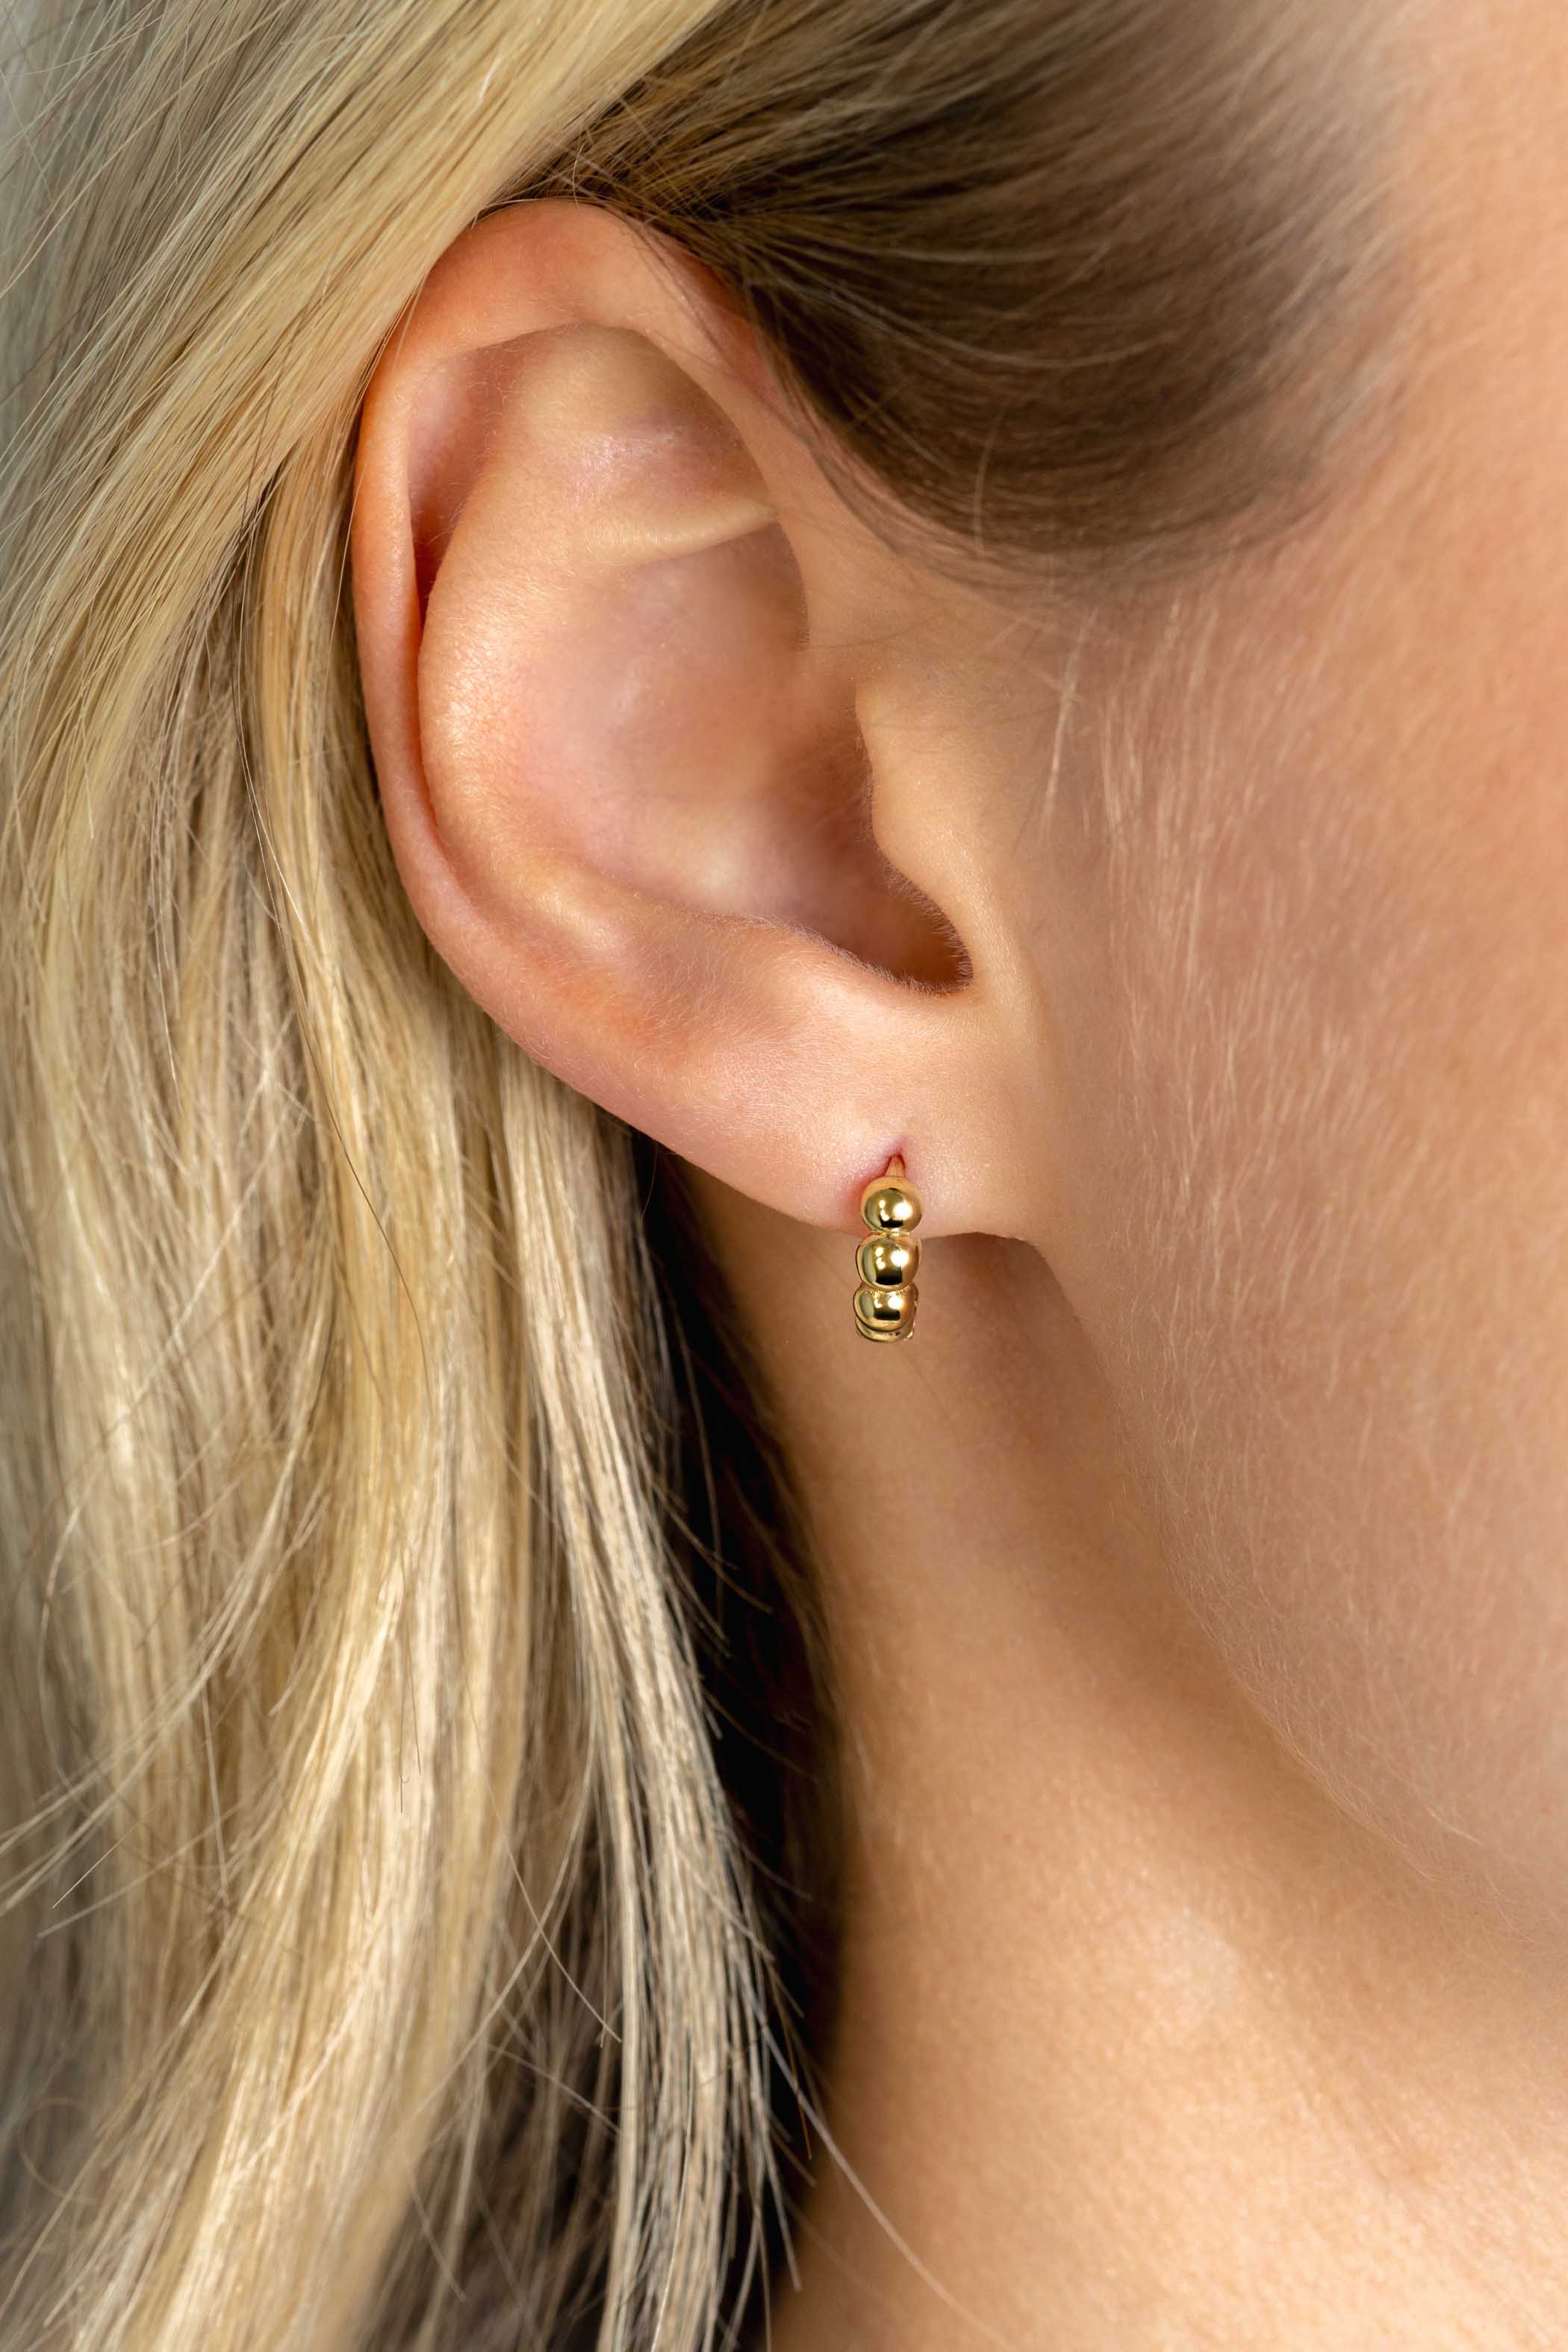 11mm ZINZI 14K Gold Hoop Earrings Beads 11 x 3,3mm ZGO431